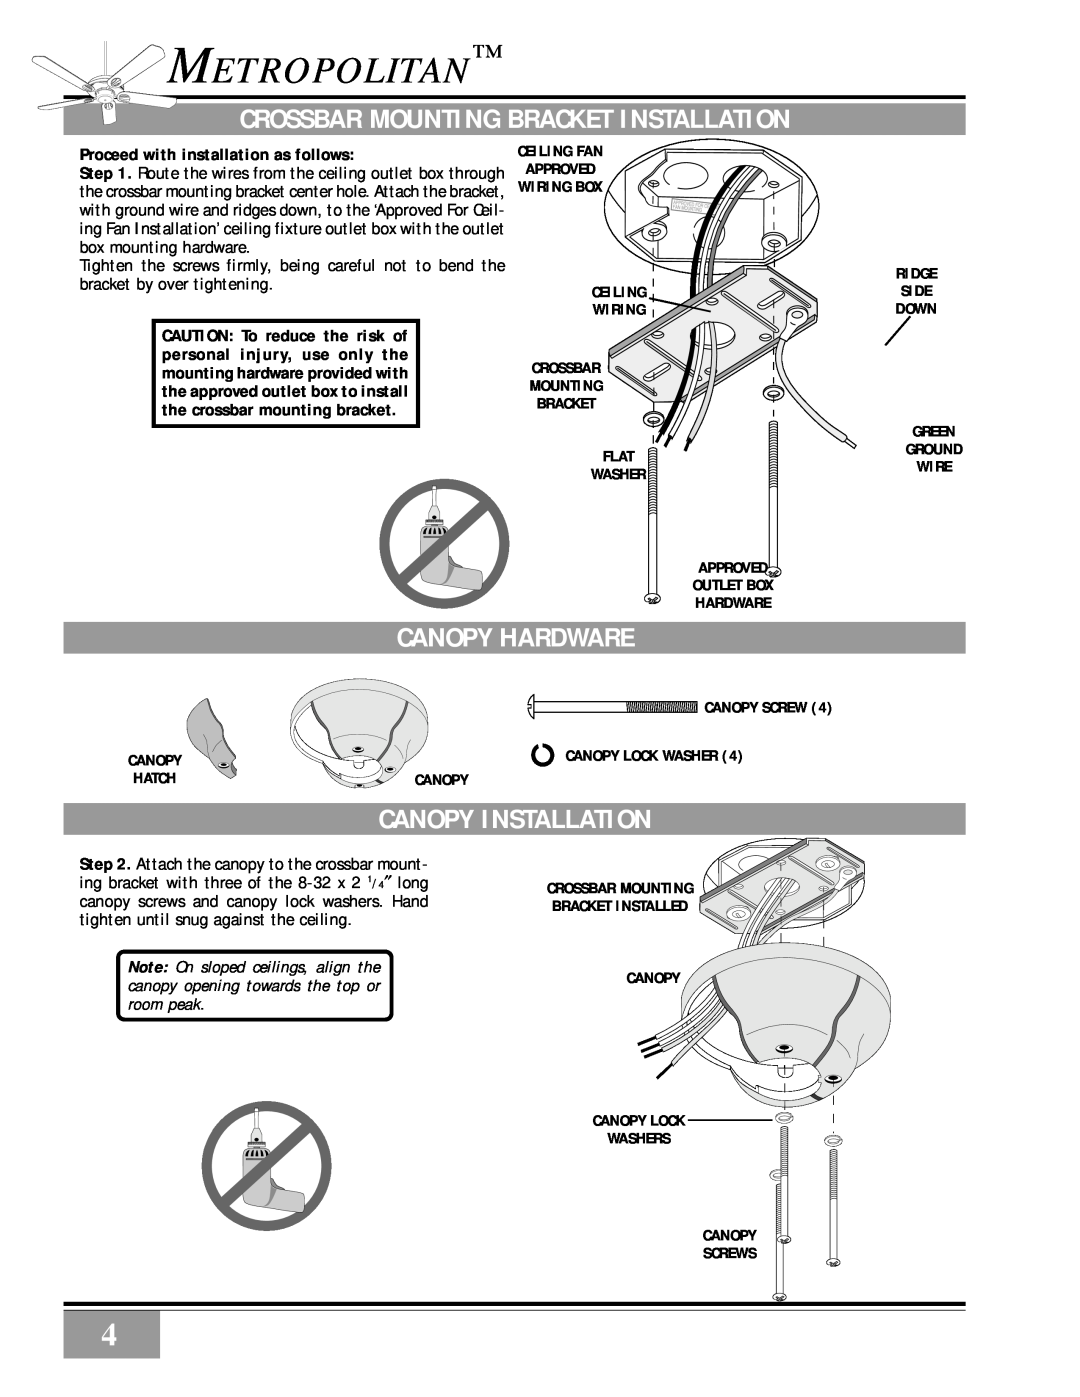 Casablanca Fan Company Metropolitan manual Crossbar Mounting Bracket Installation, Canopy Hardware, Canopy Installation 